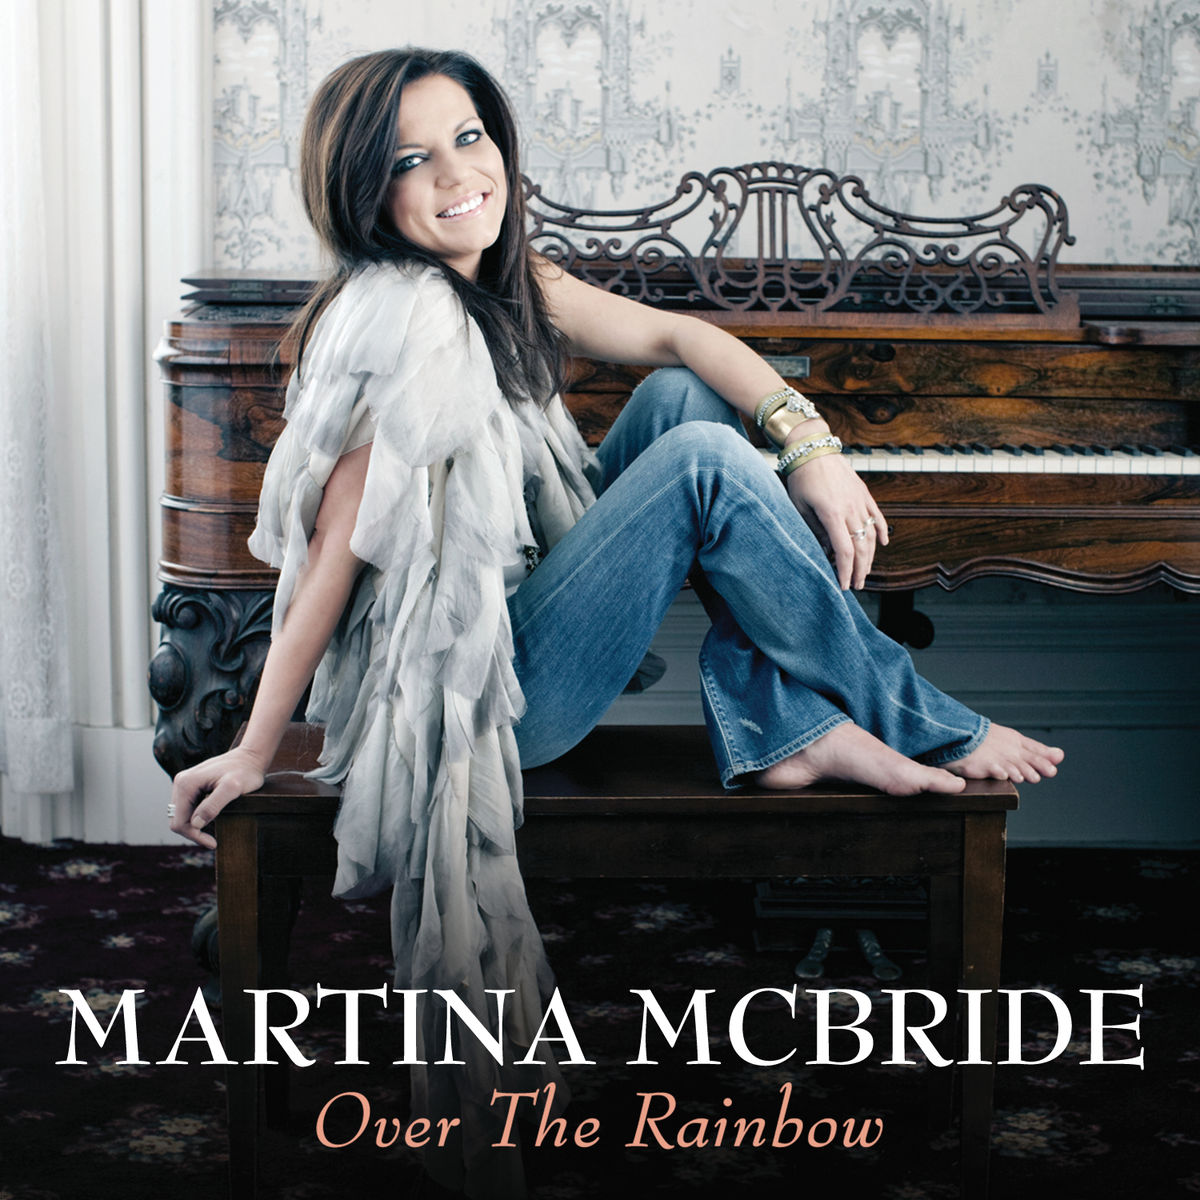 Martina Mcbride Over The Rainbow Austriancharts At